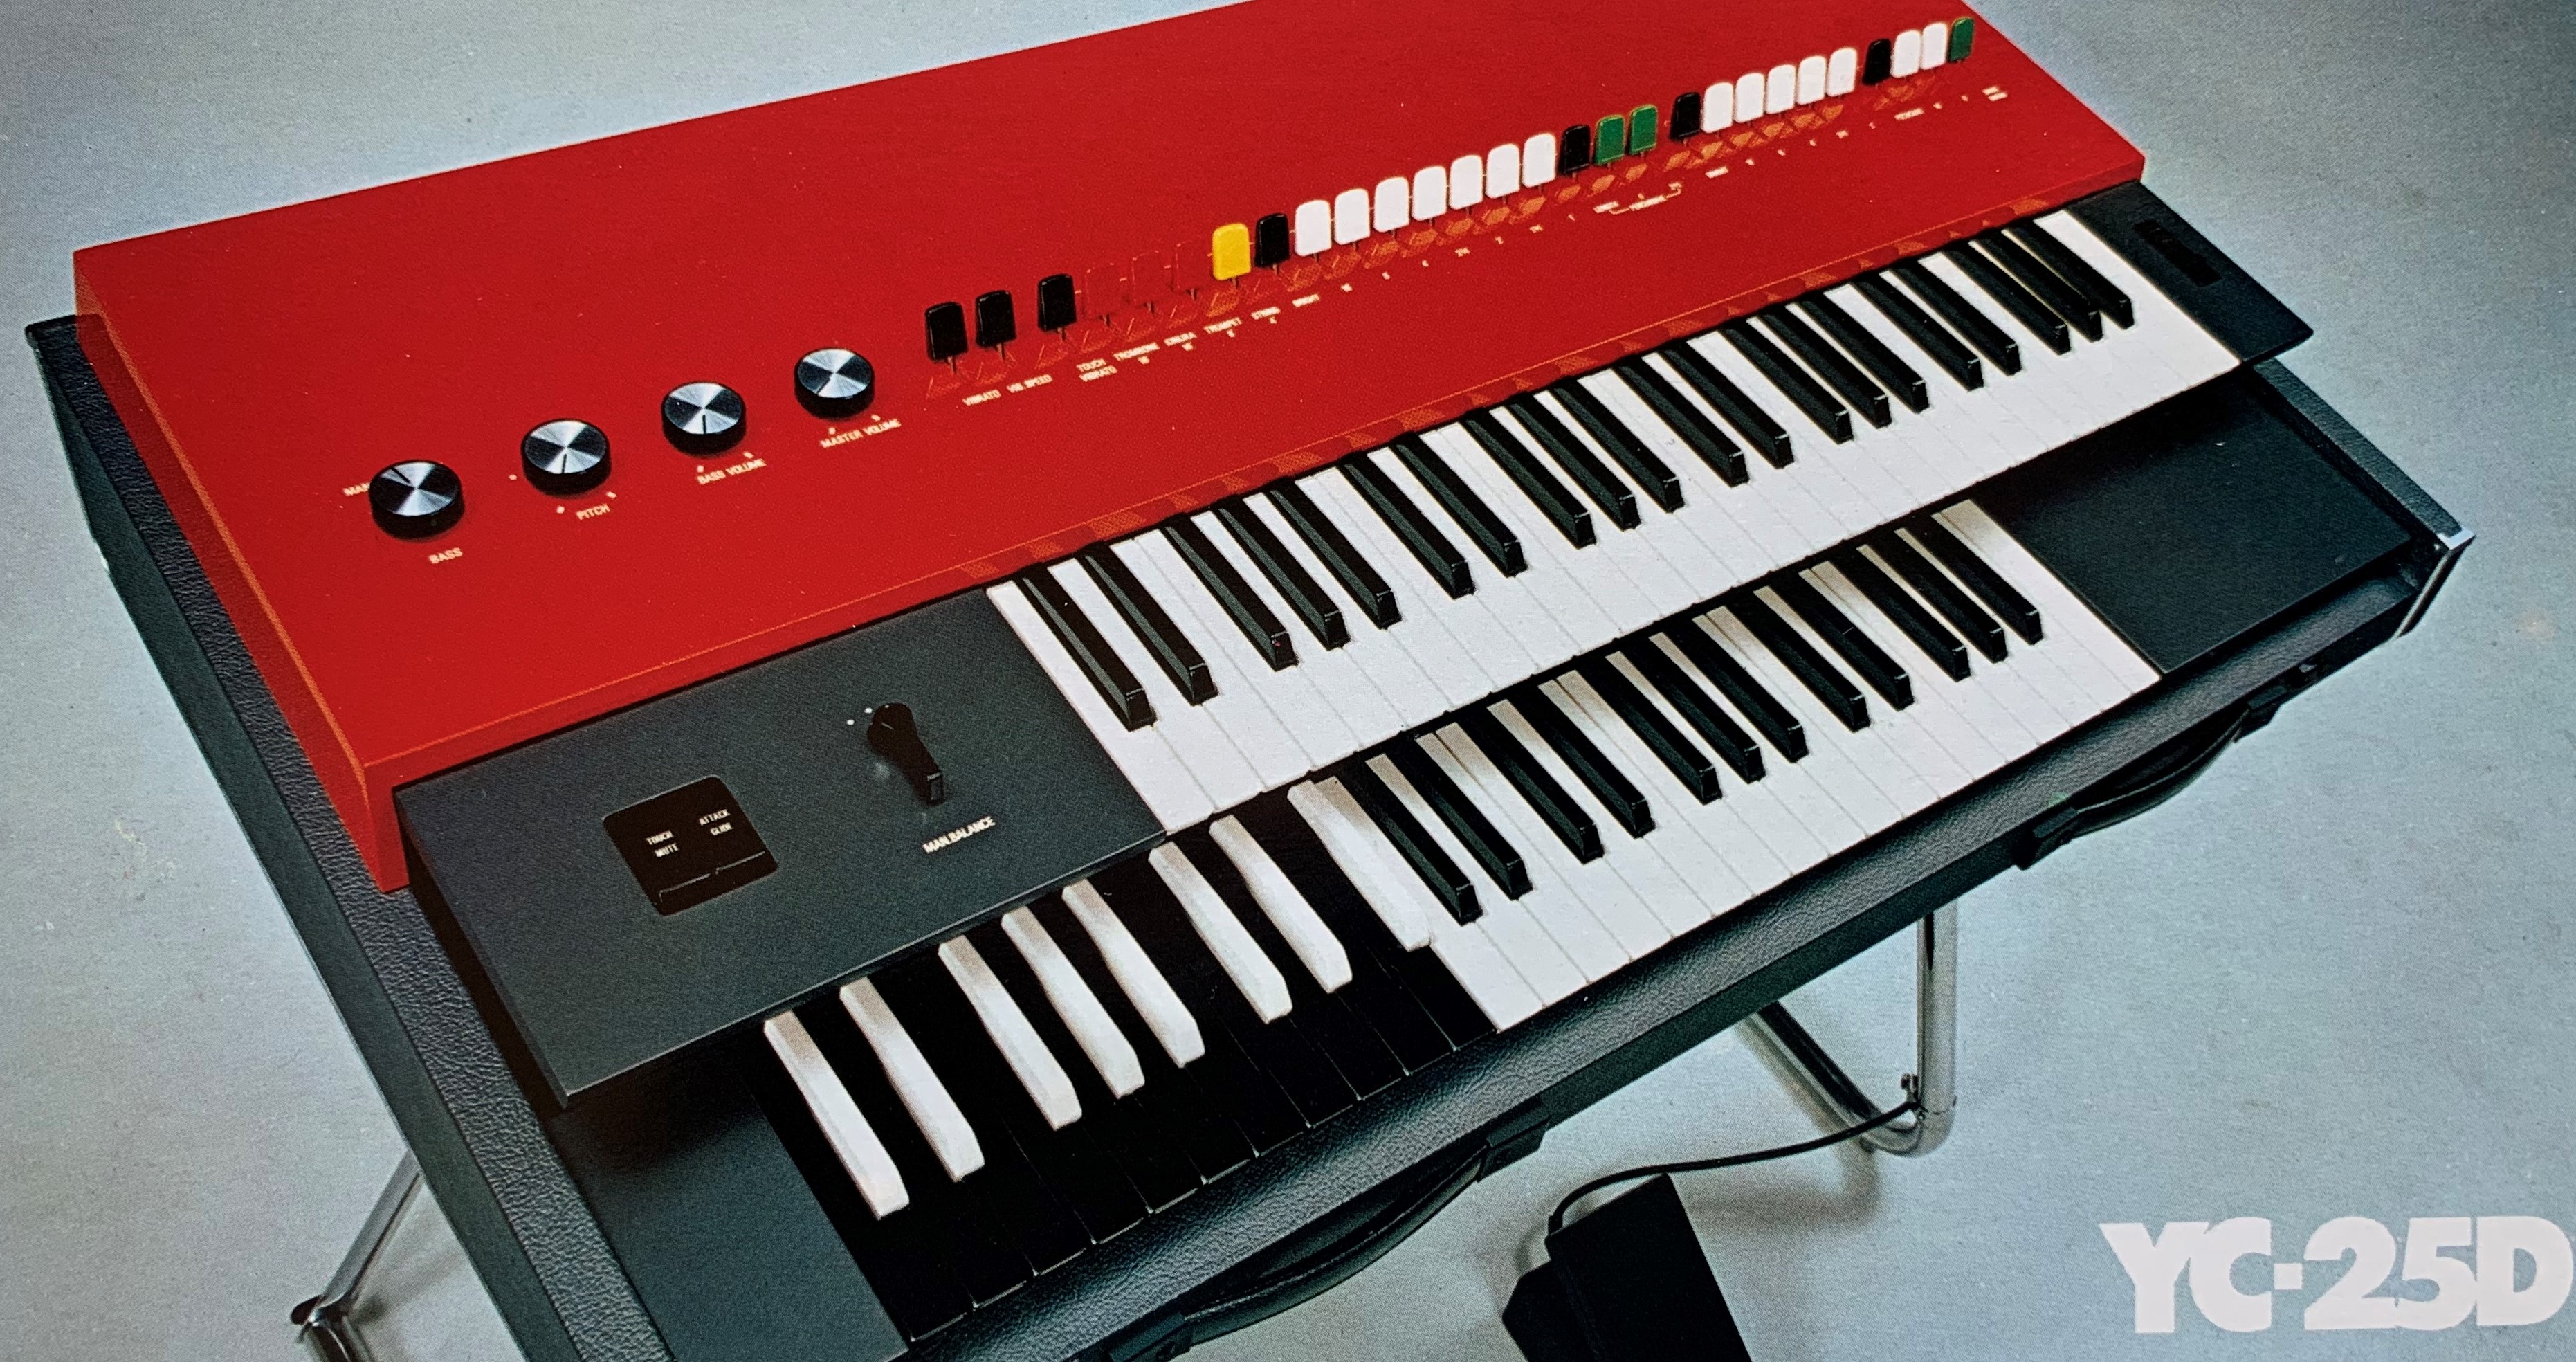 Yamaha YC Compact Organs | Preserve the Sound